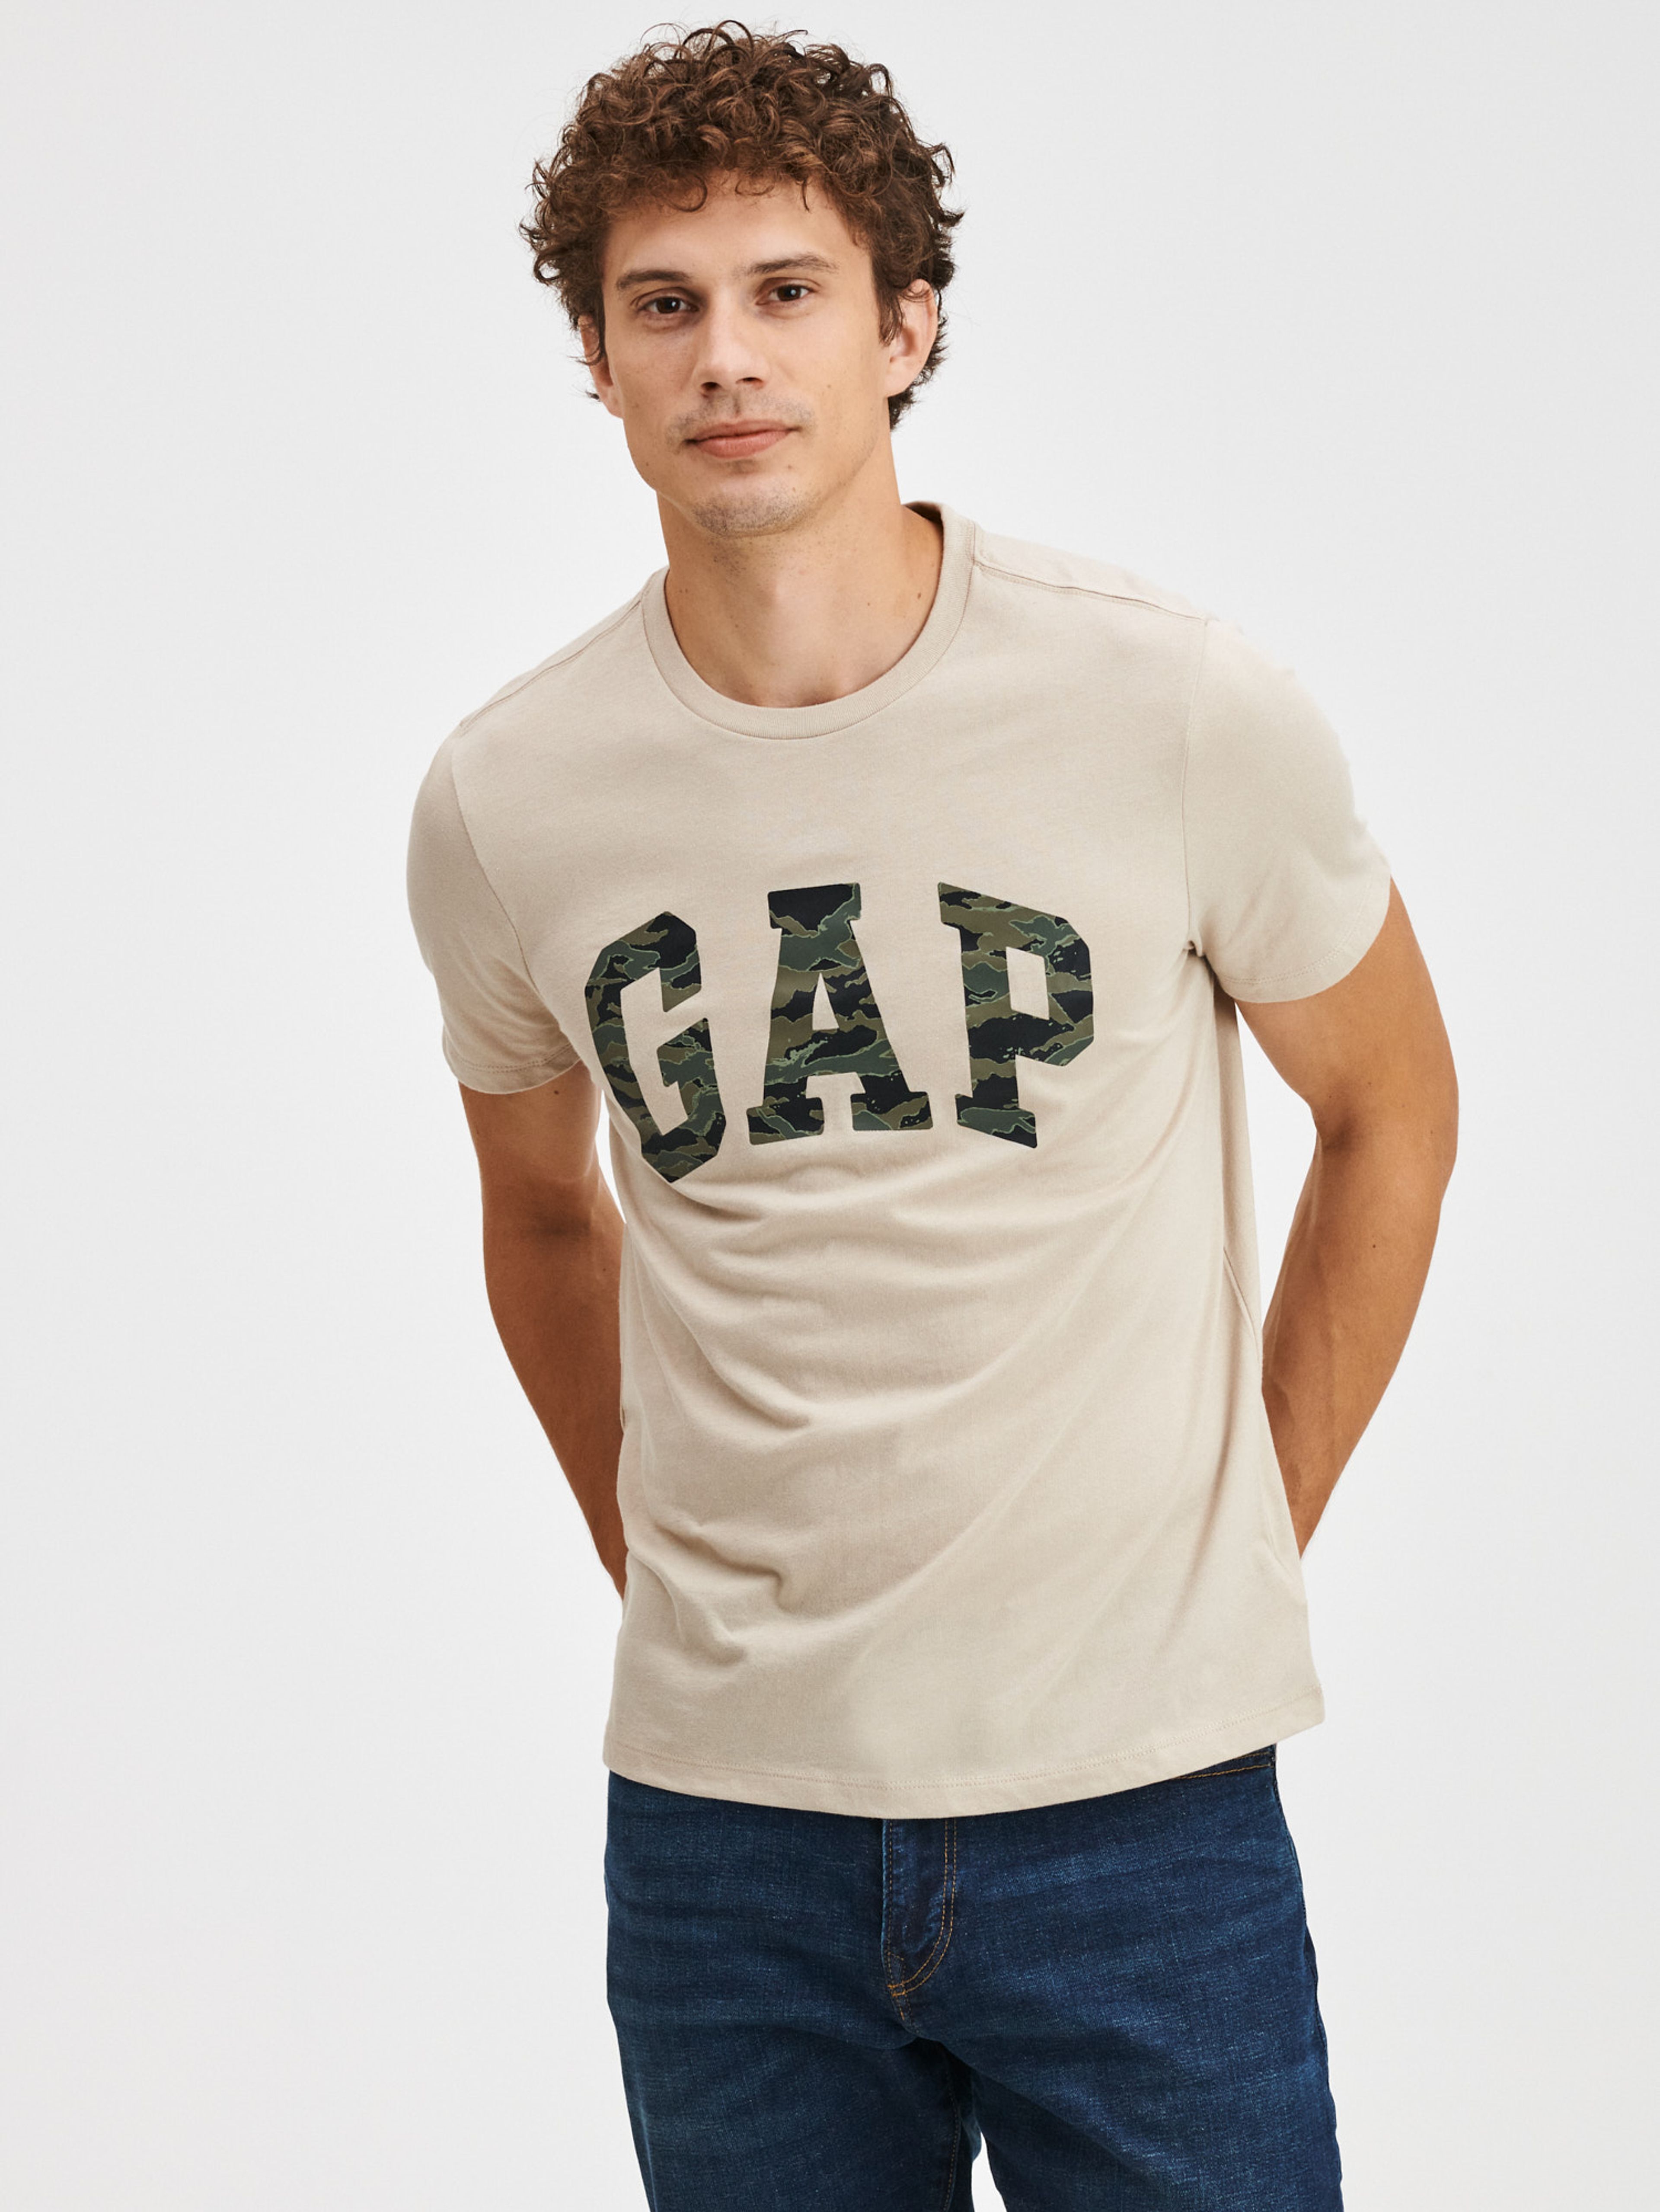 Tričko GAP logo